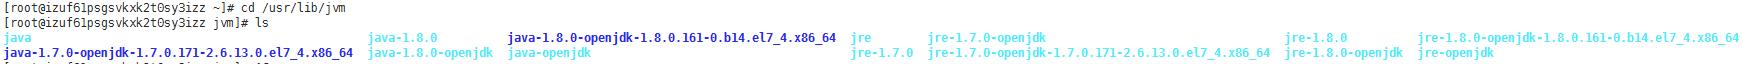 linux配置jdk,jenkins - 文章图片